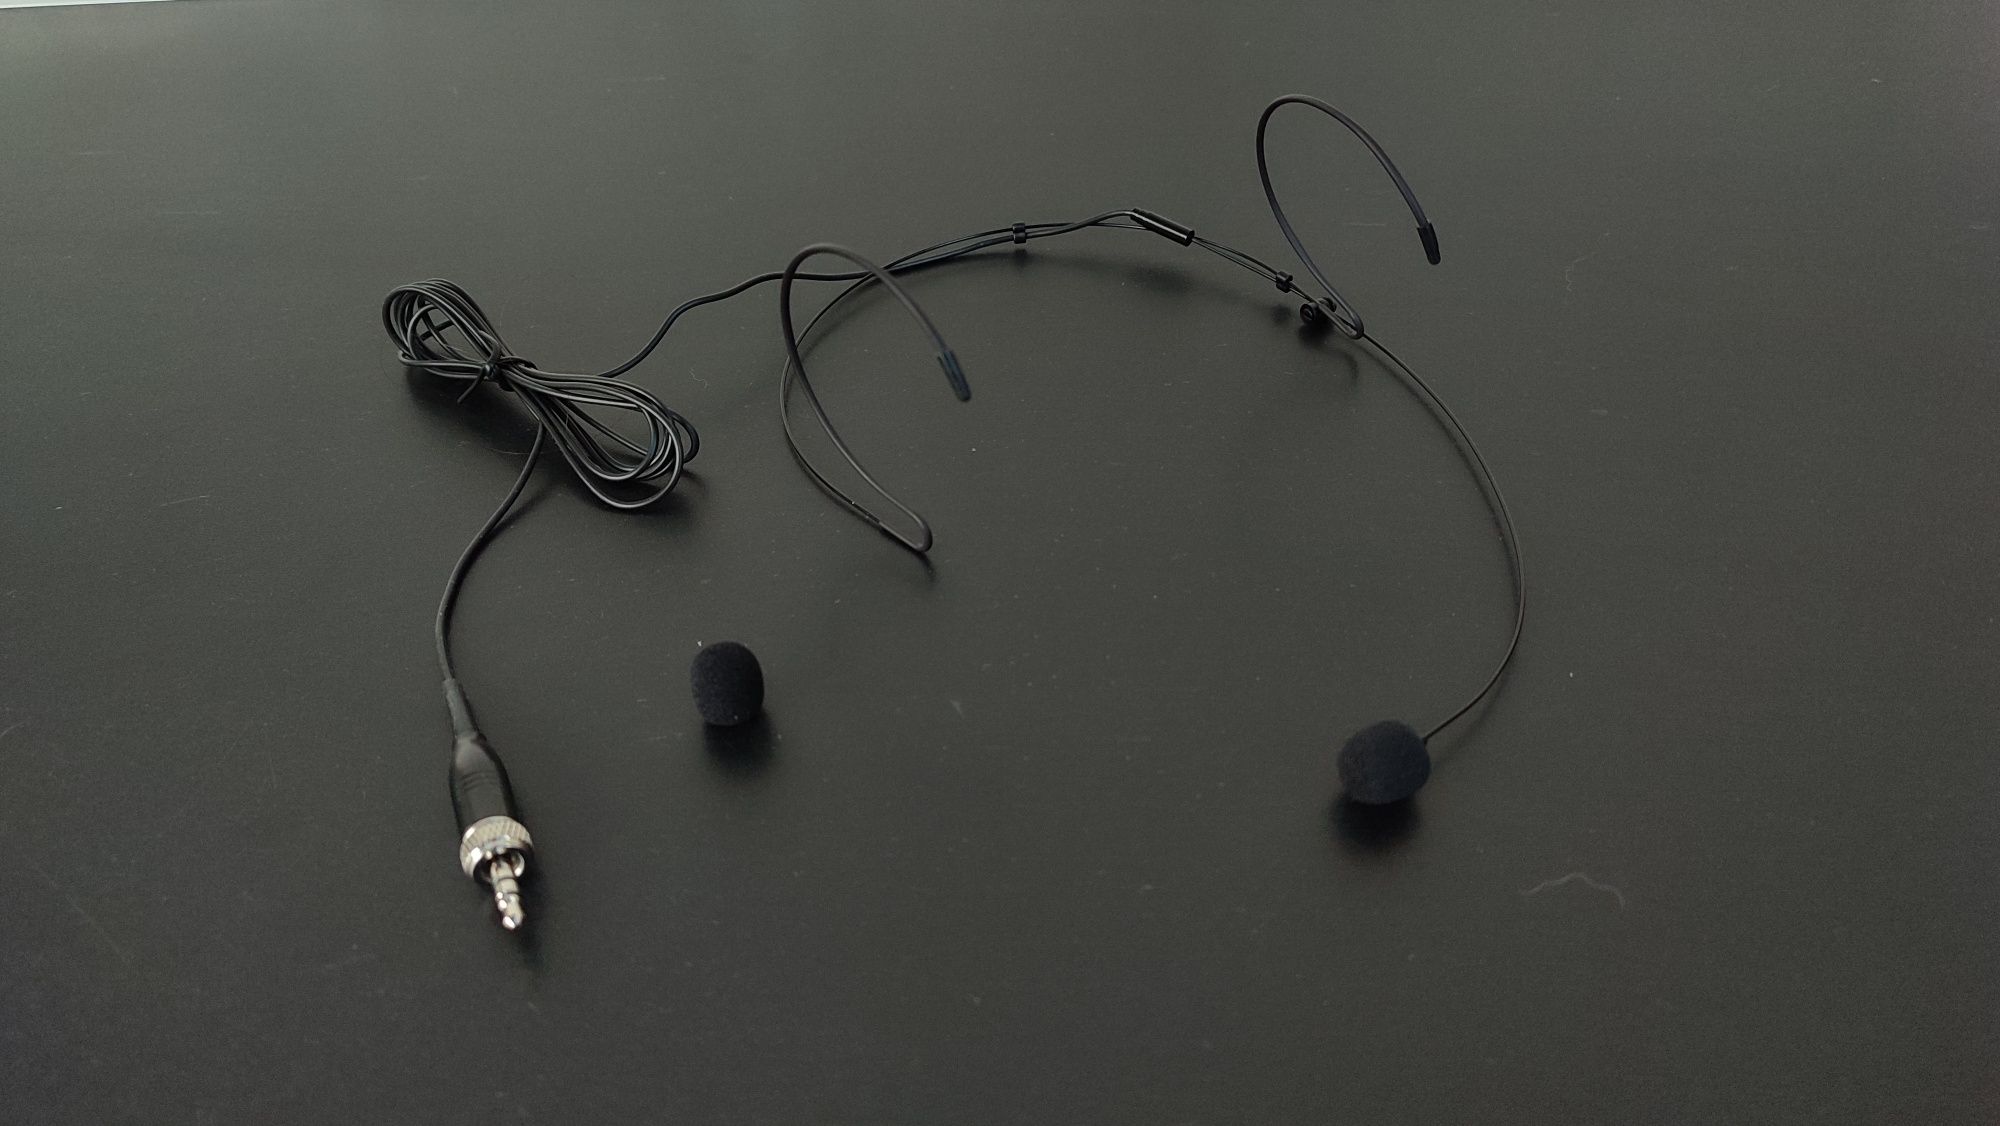 microfon pentru lavaliera omnidirectional seinheiser shure headset